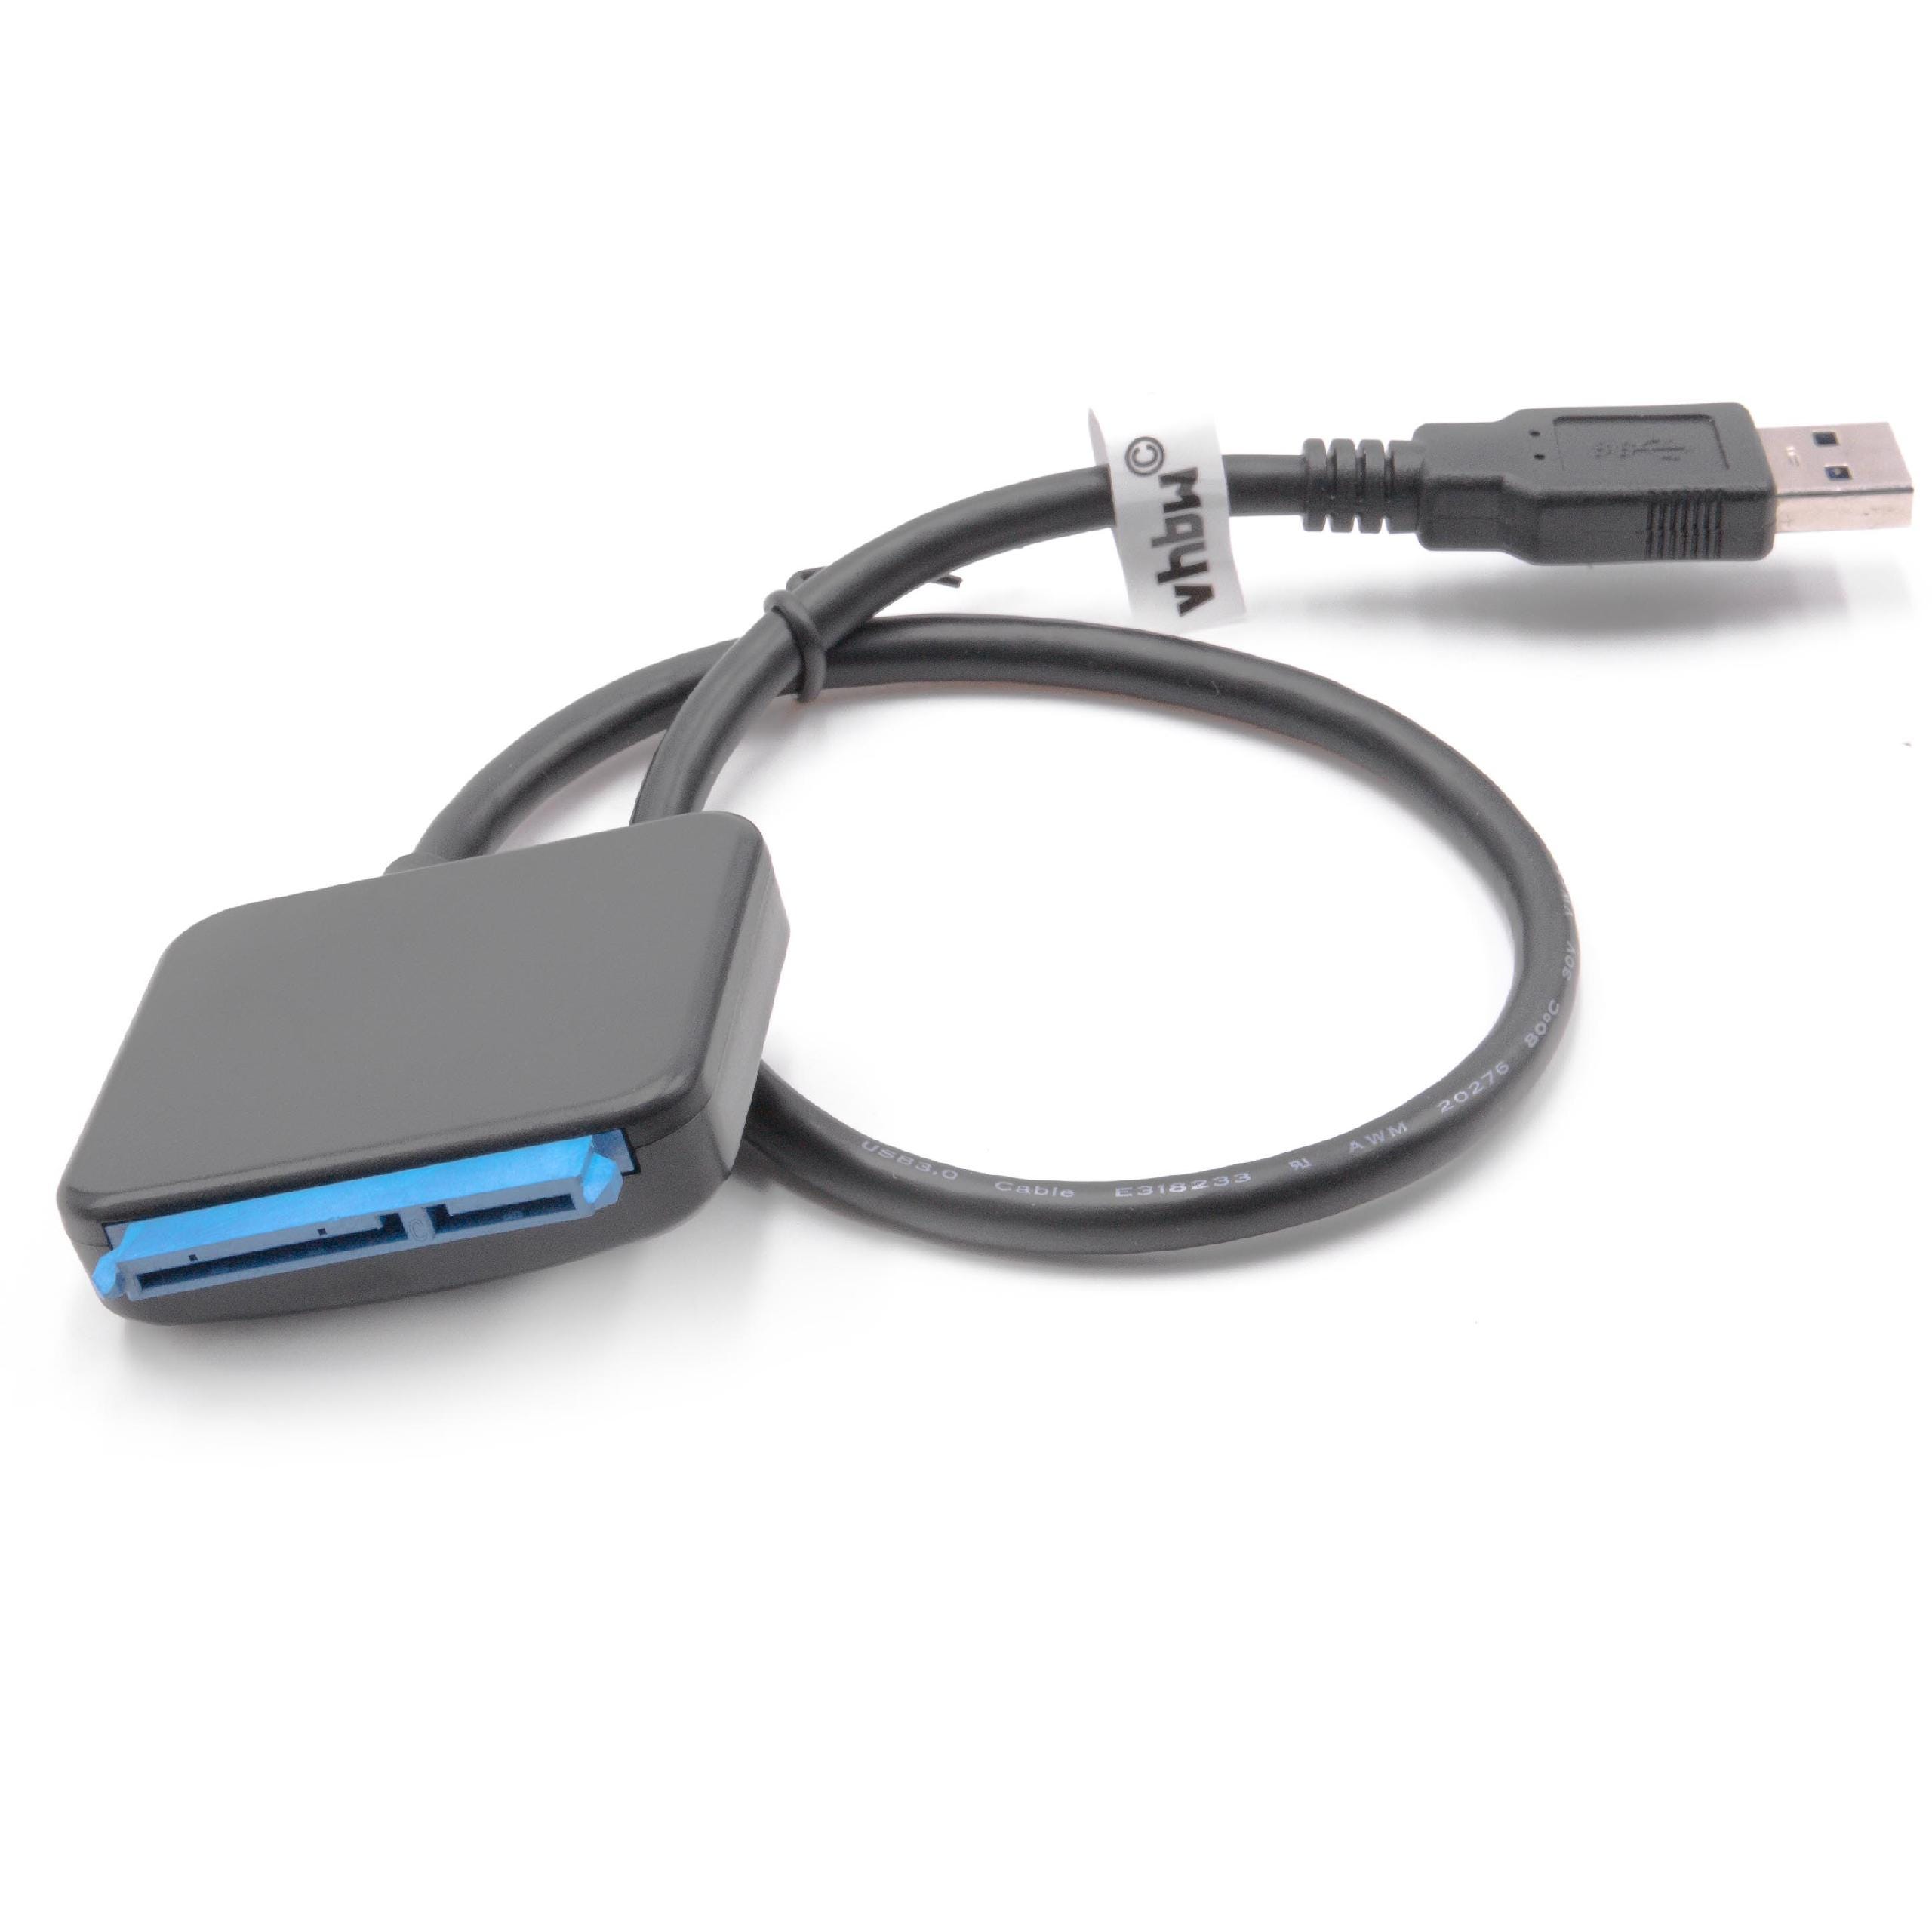 Vhbw SATA III vers USB 3.0 Câble de raccordement pour disque dur 2